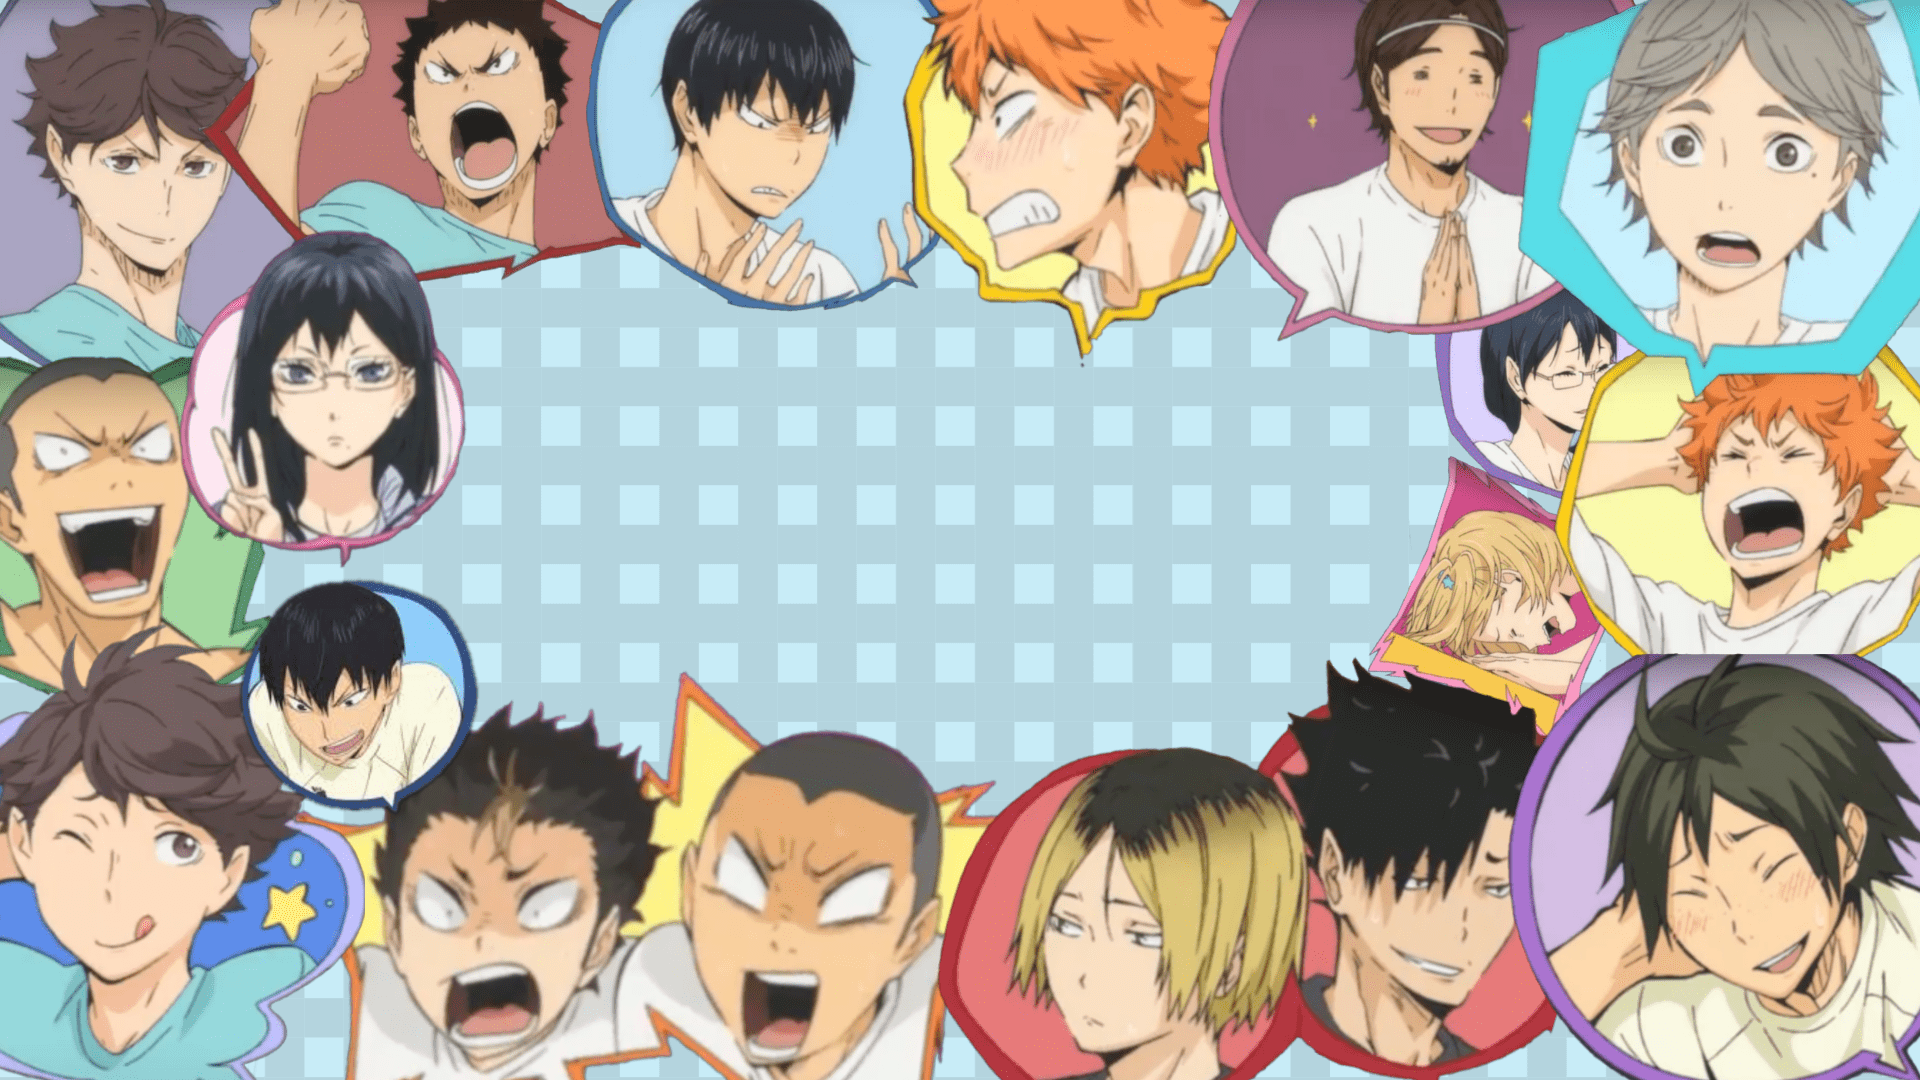 Order Of The Weebs trên Twitter I made this oikawa wallpaper haikyuu  anime wallpaper oikawa toruoikawa haikyuuedit aesthetic  httpstcoZ3RwqebPt4  Twitter